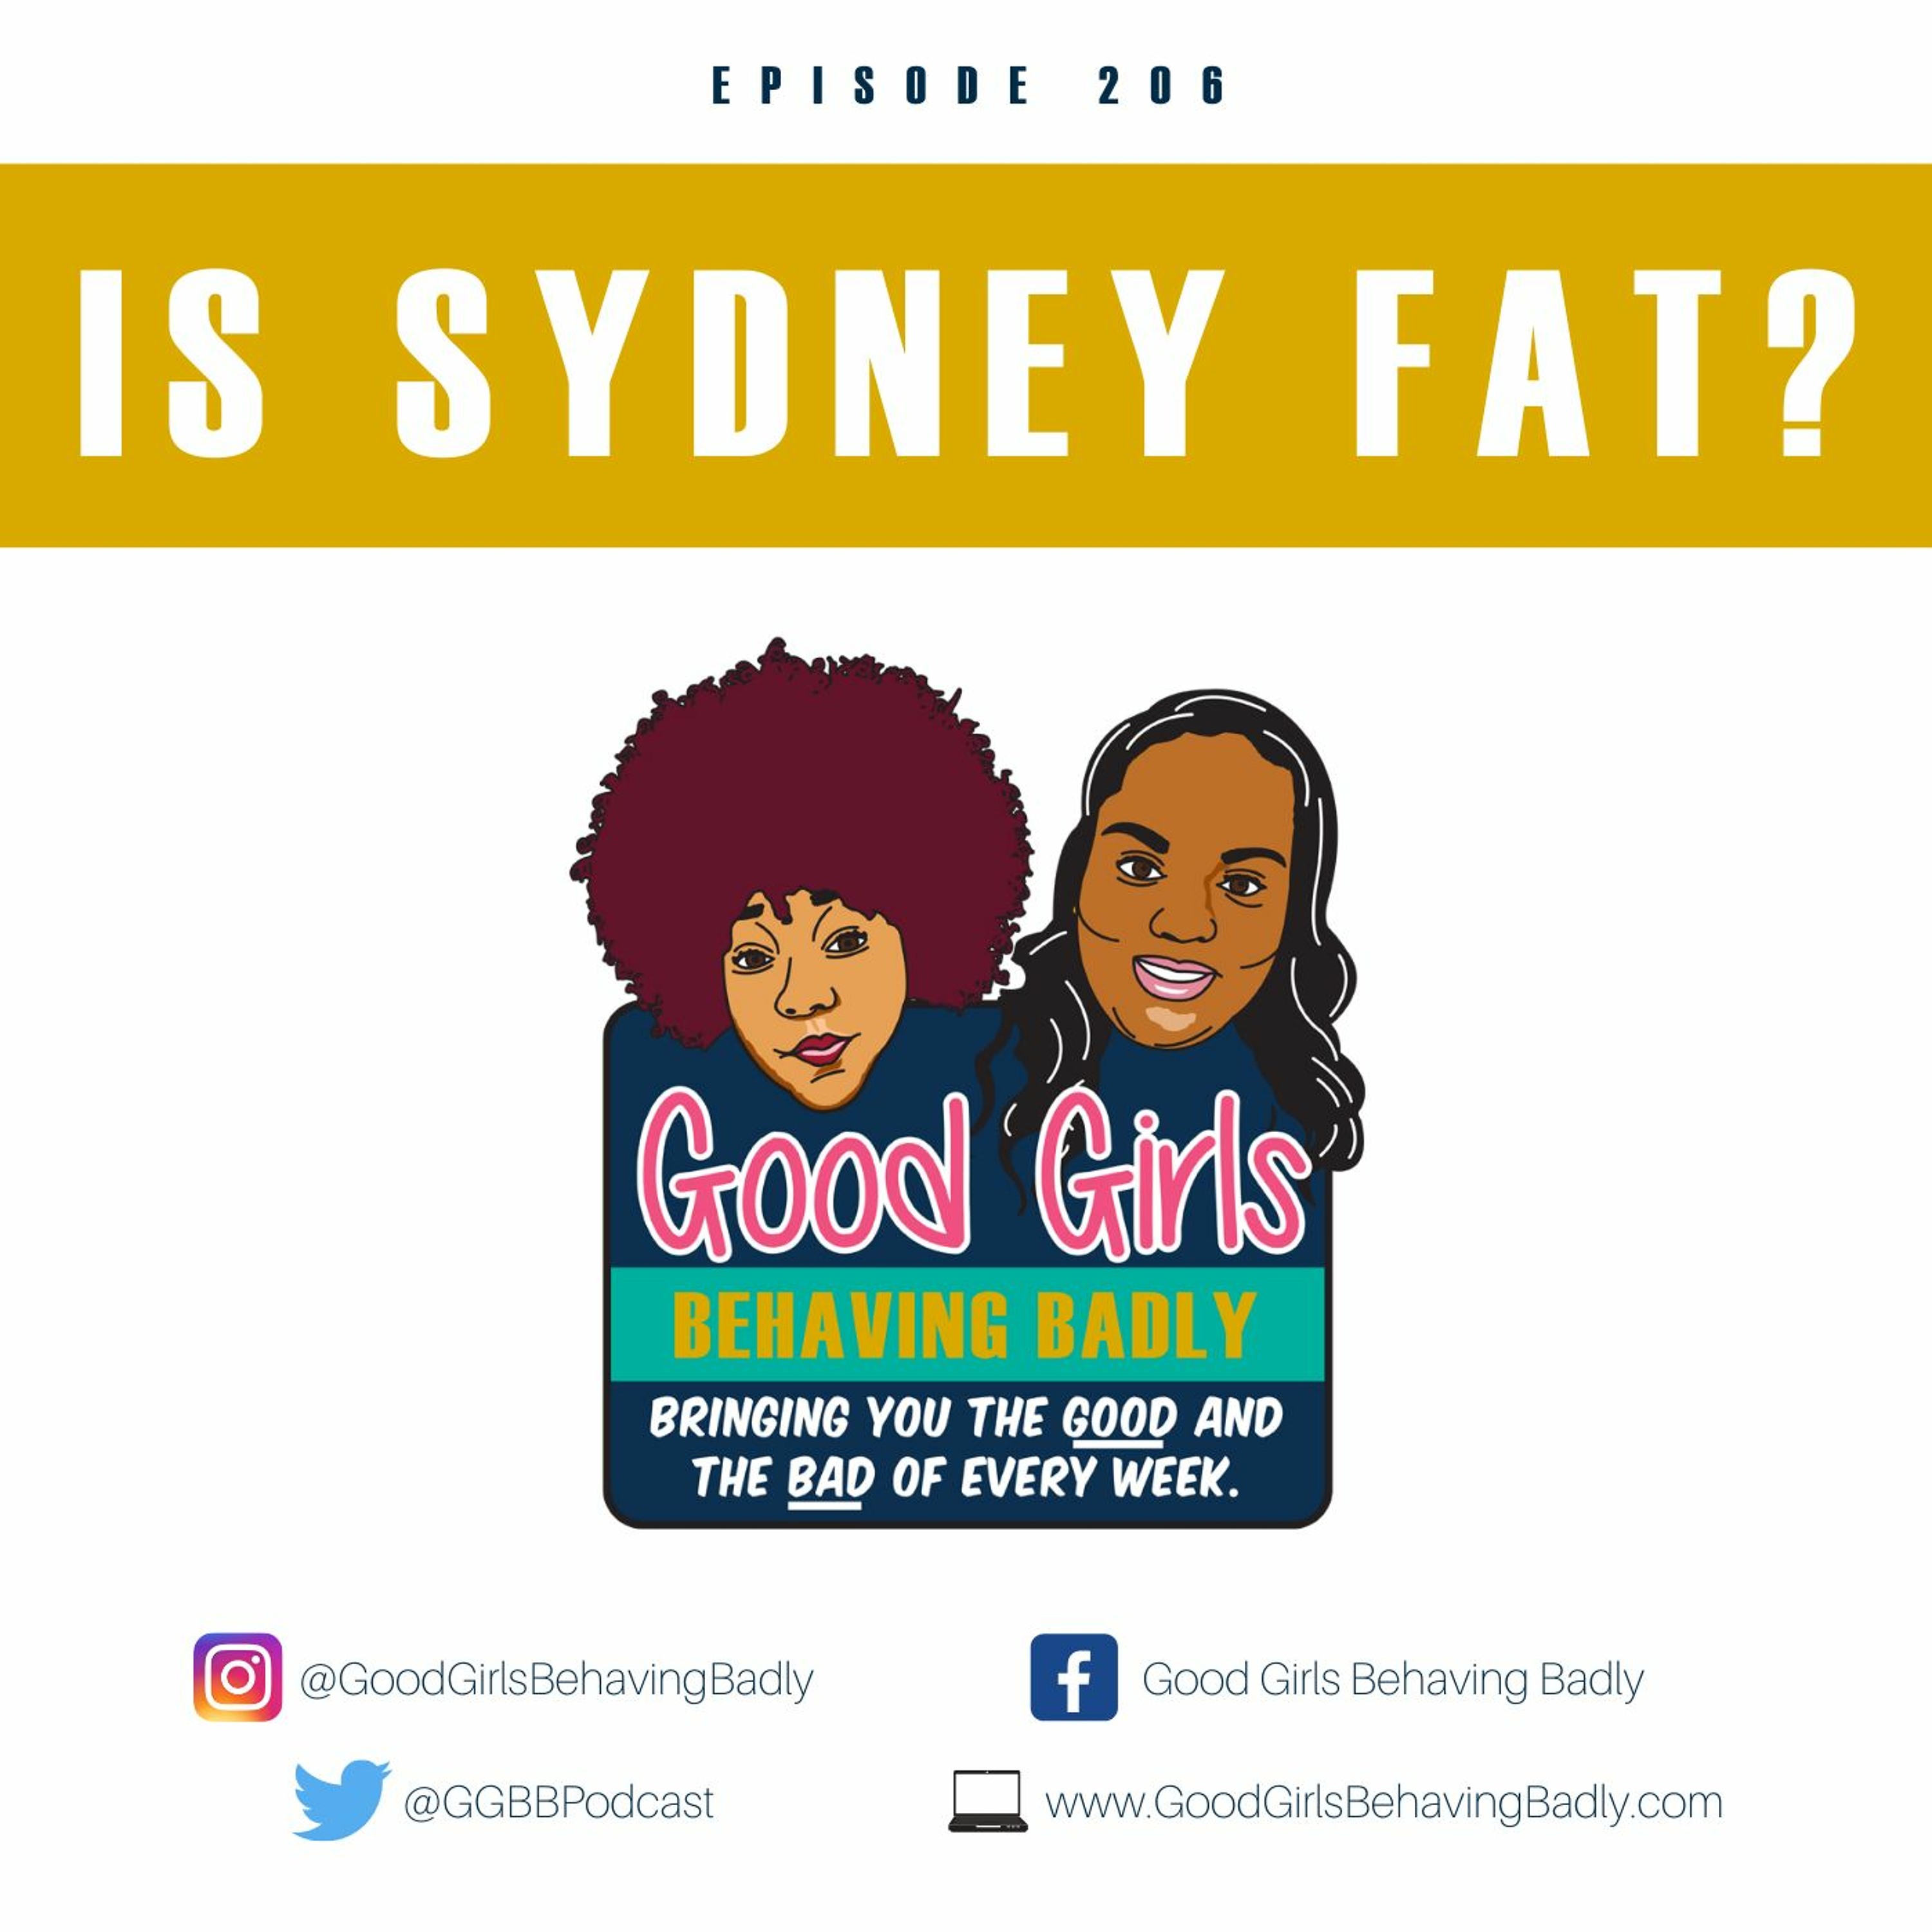 Episode 206: Is Sydney Fat?